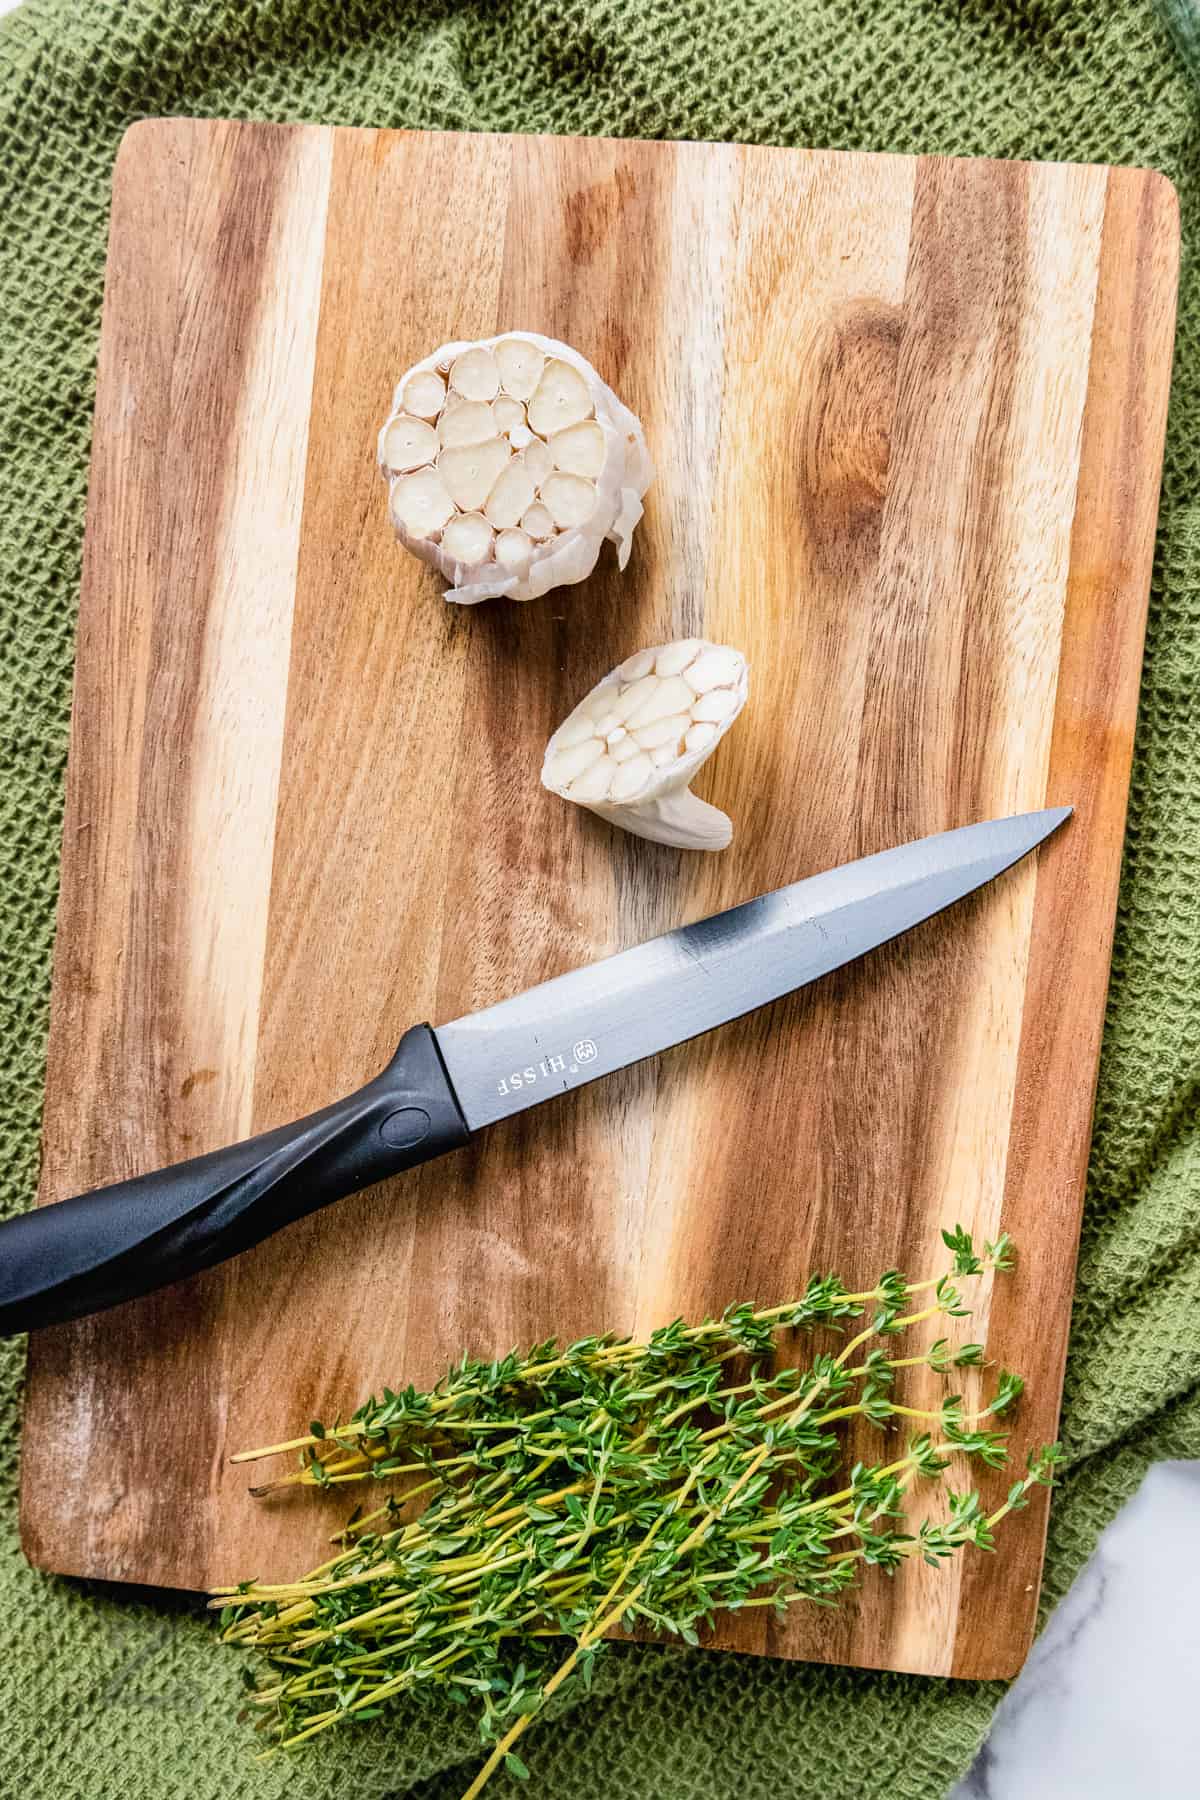 cutting open garlic to make Garlic Confit